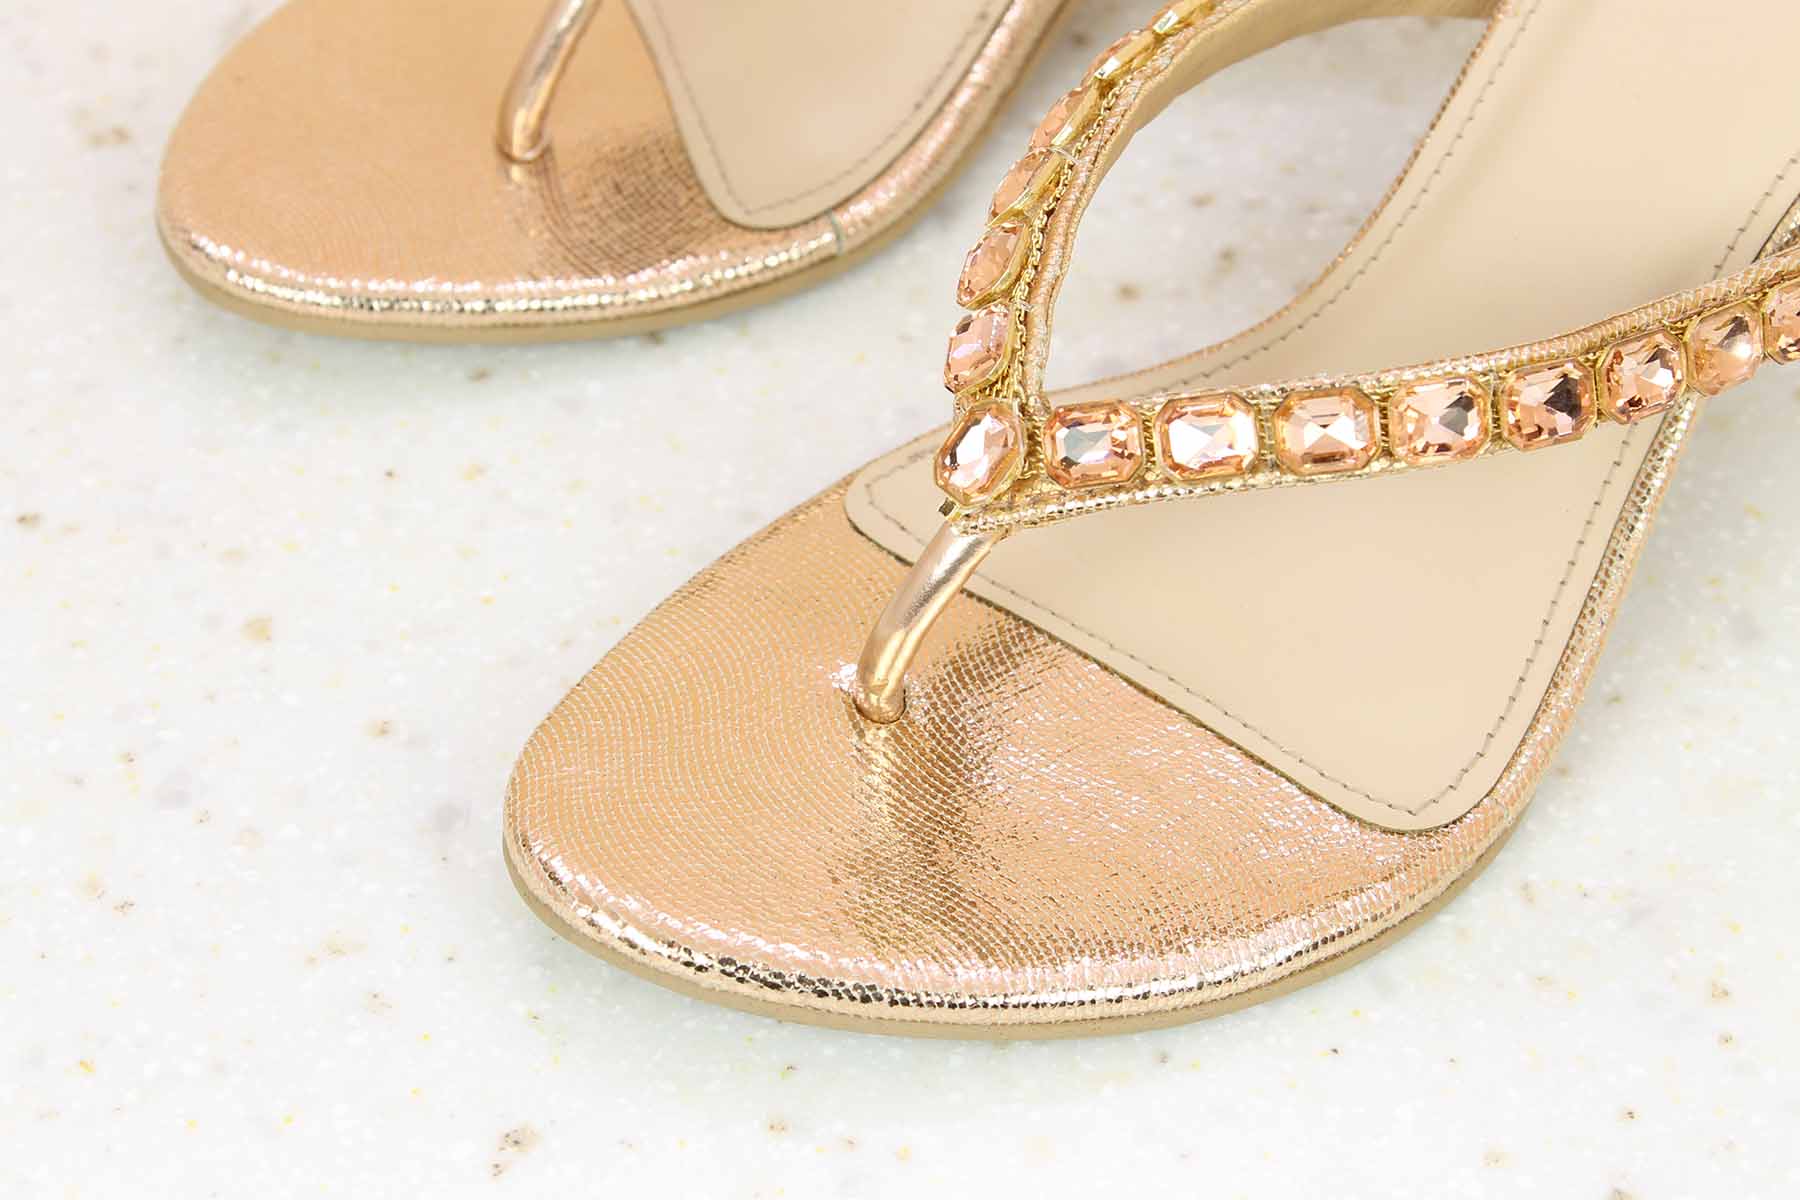 SMALL HEEL DIAMOND THONG-Women's Thong-Slipons-Inc5 Shoes